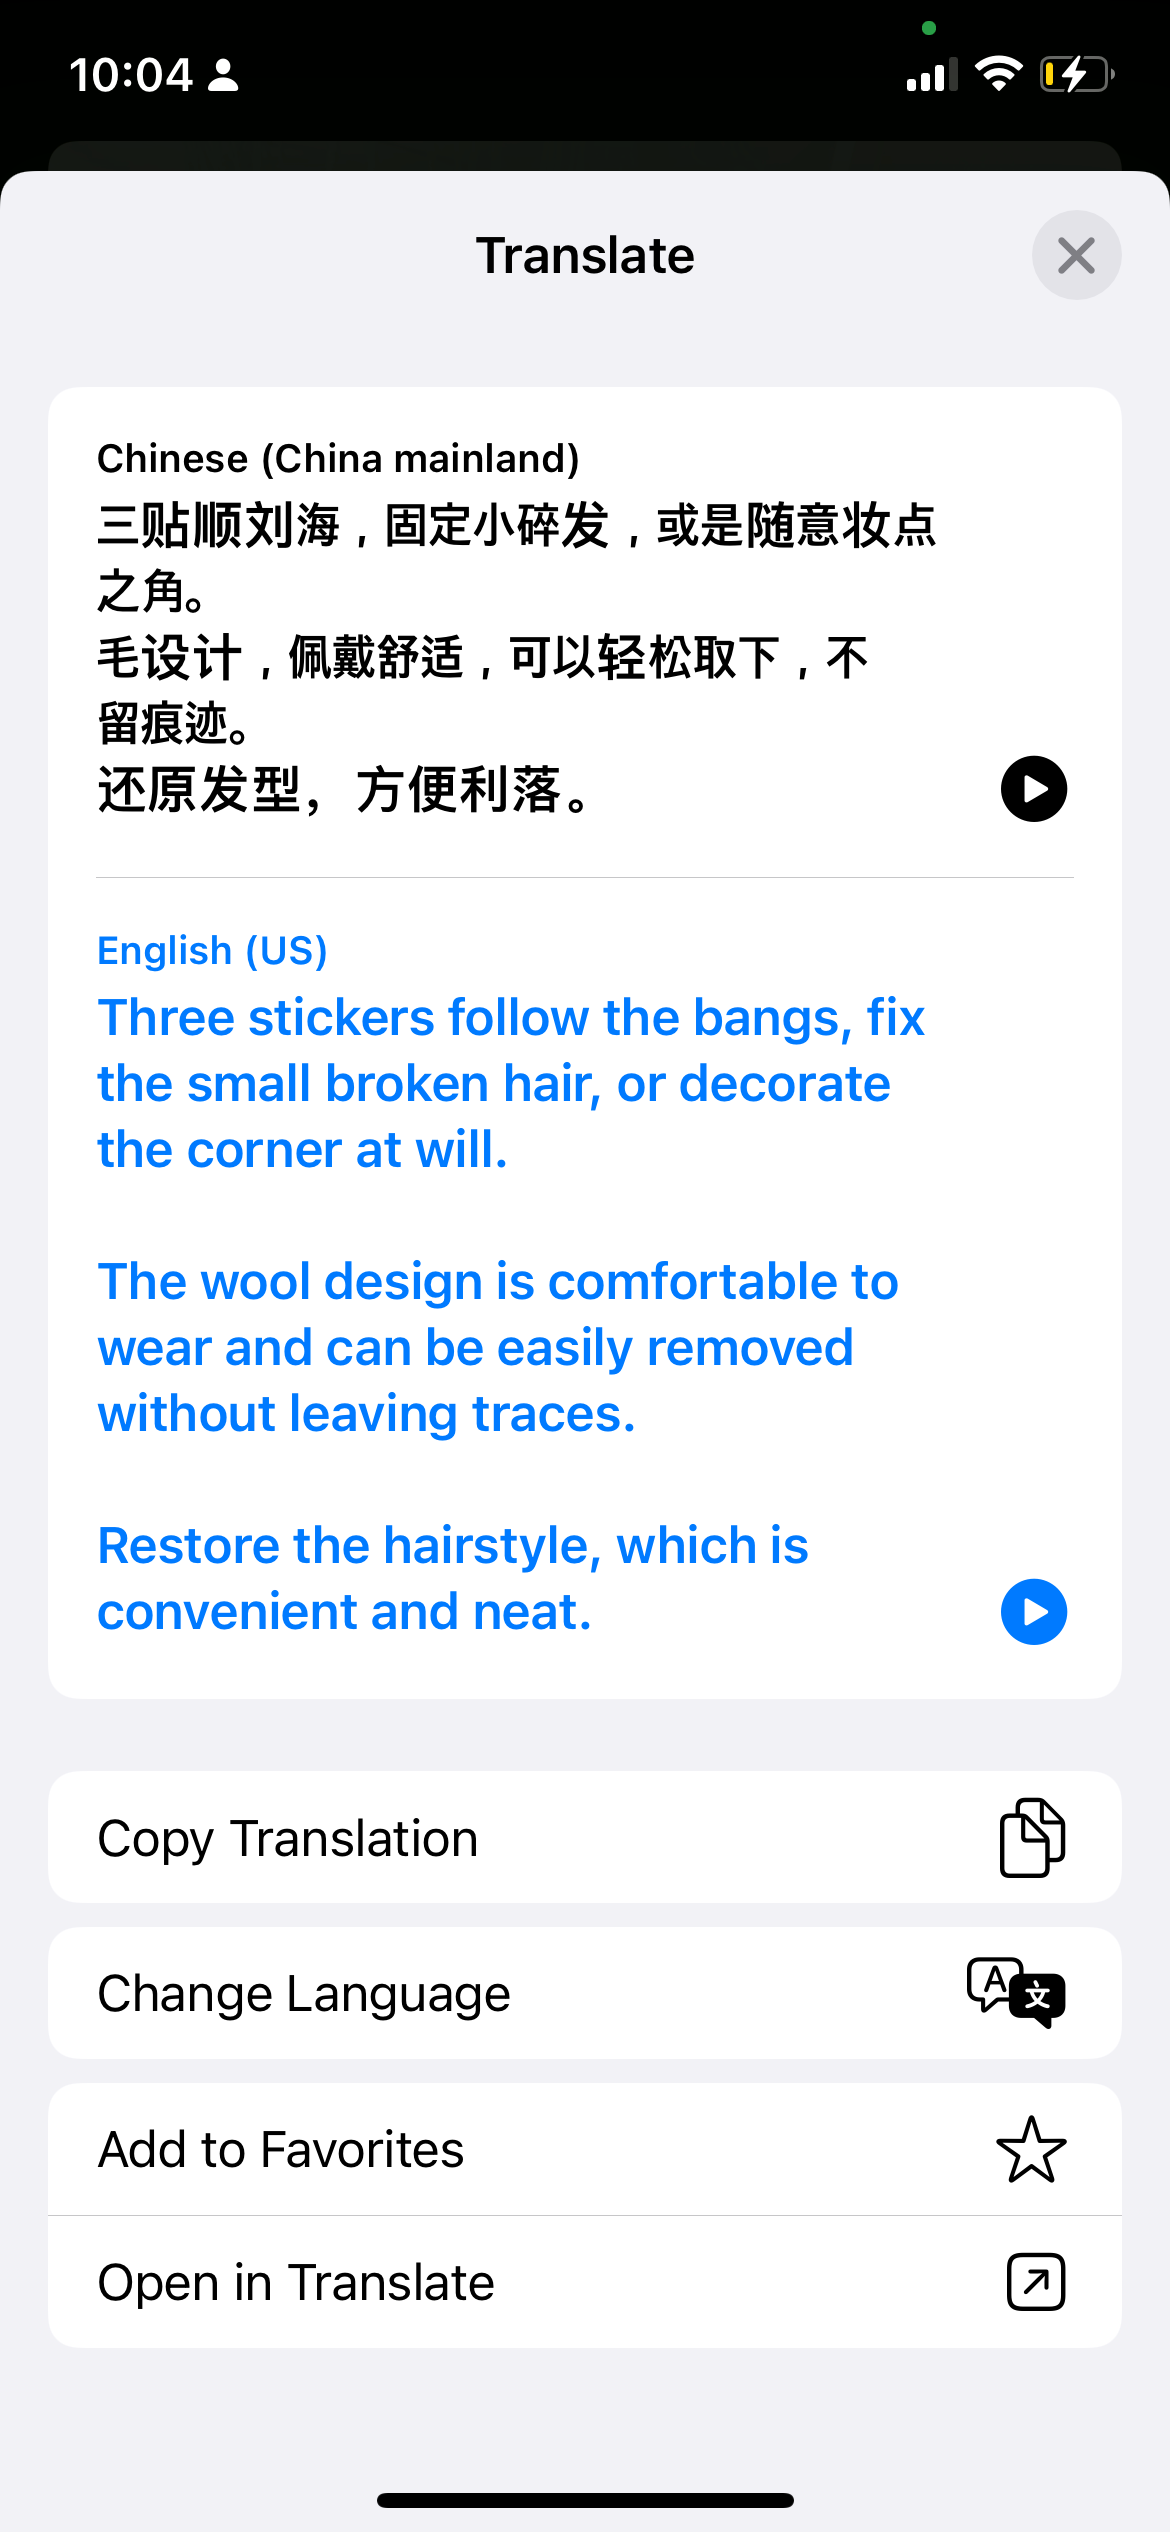 Translate window showing translation